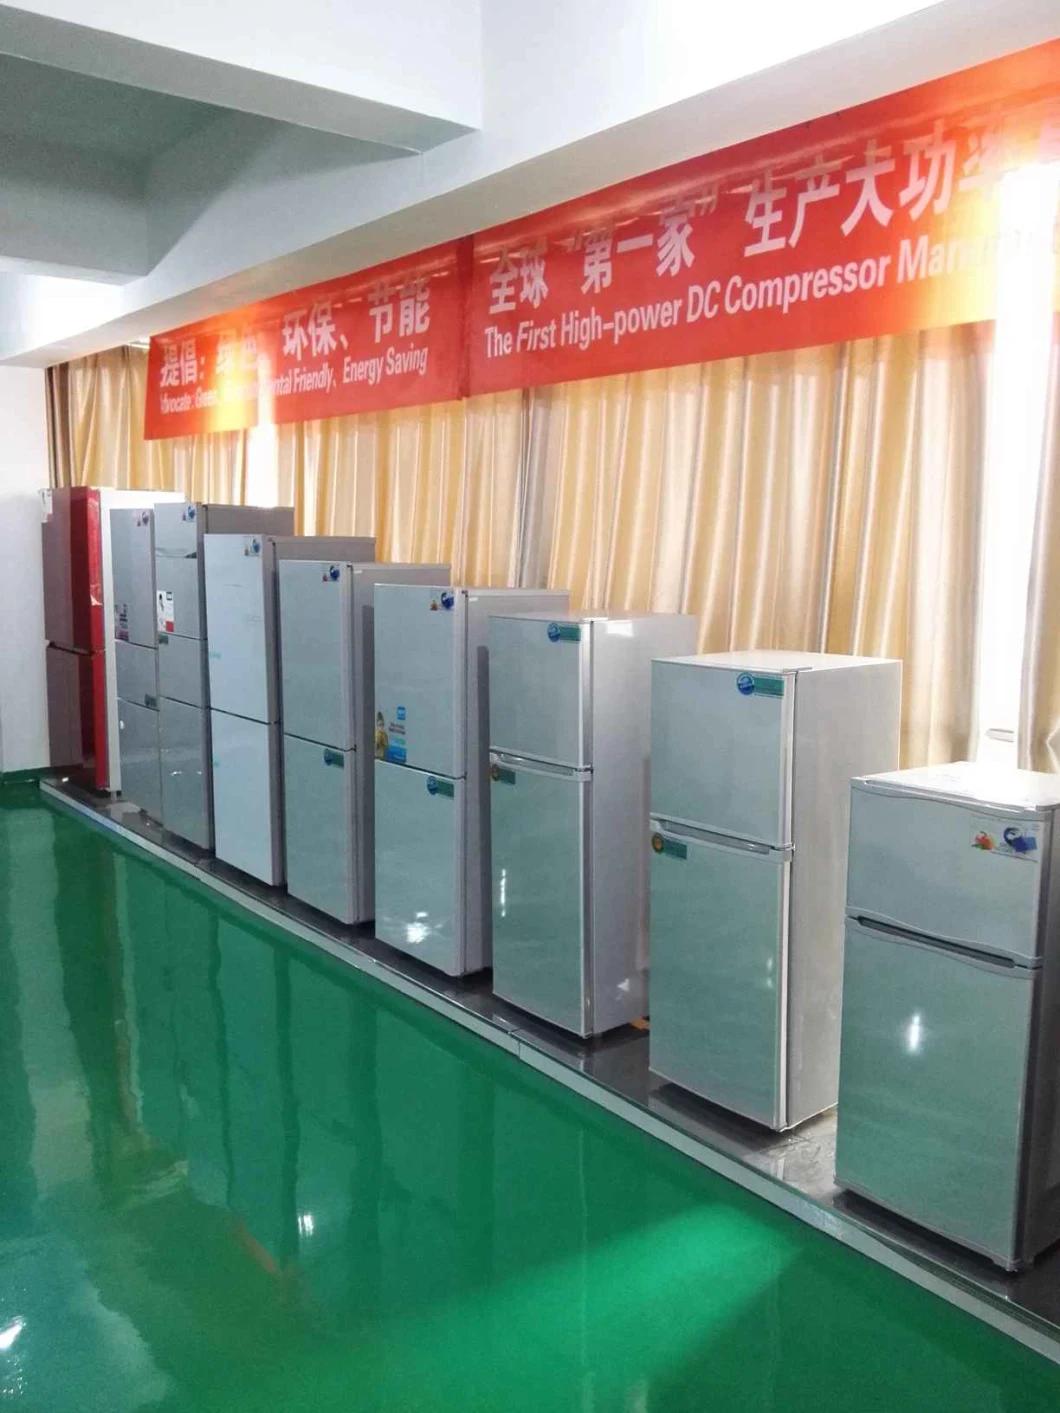 Refrigerator Solar DC Display Case Cooler Show Case 86 Liters 70W